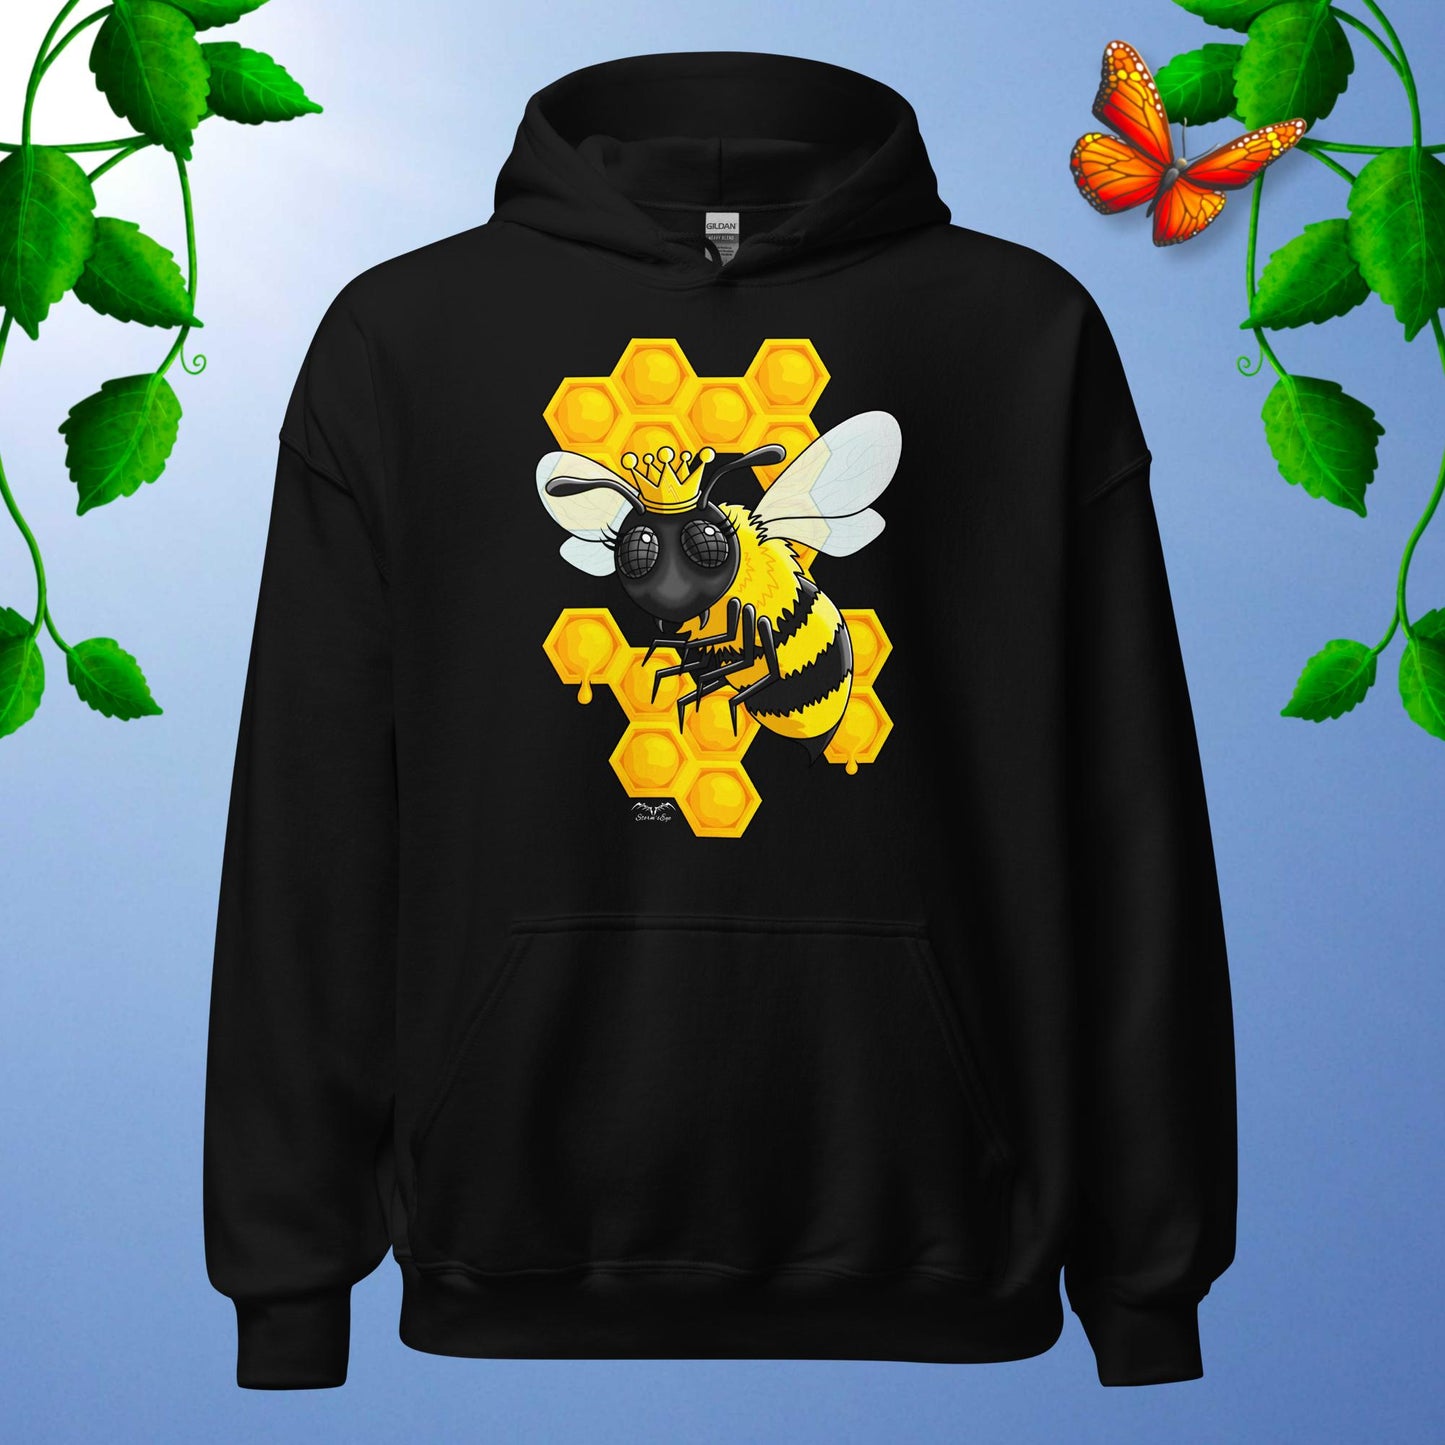 queen bee hoodie black by stormseye design